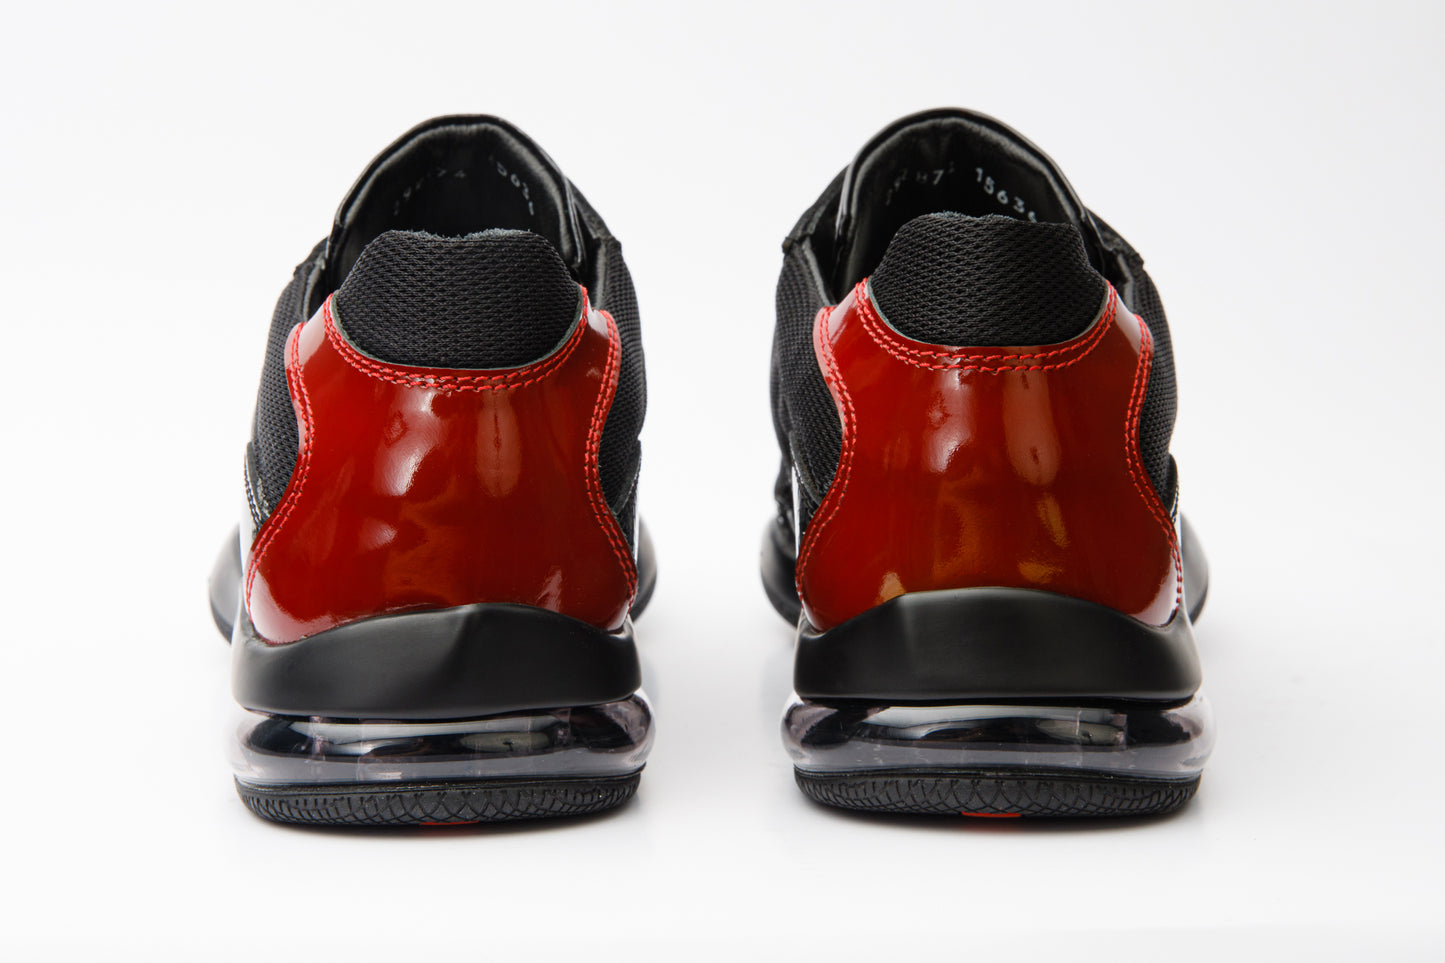 The Zona Black & Red Leather Men Sneaker